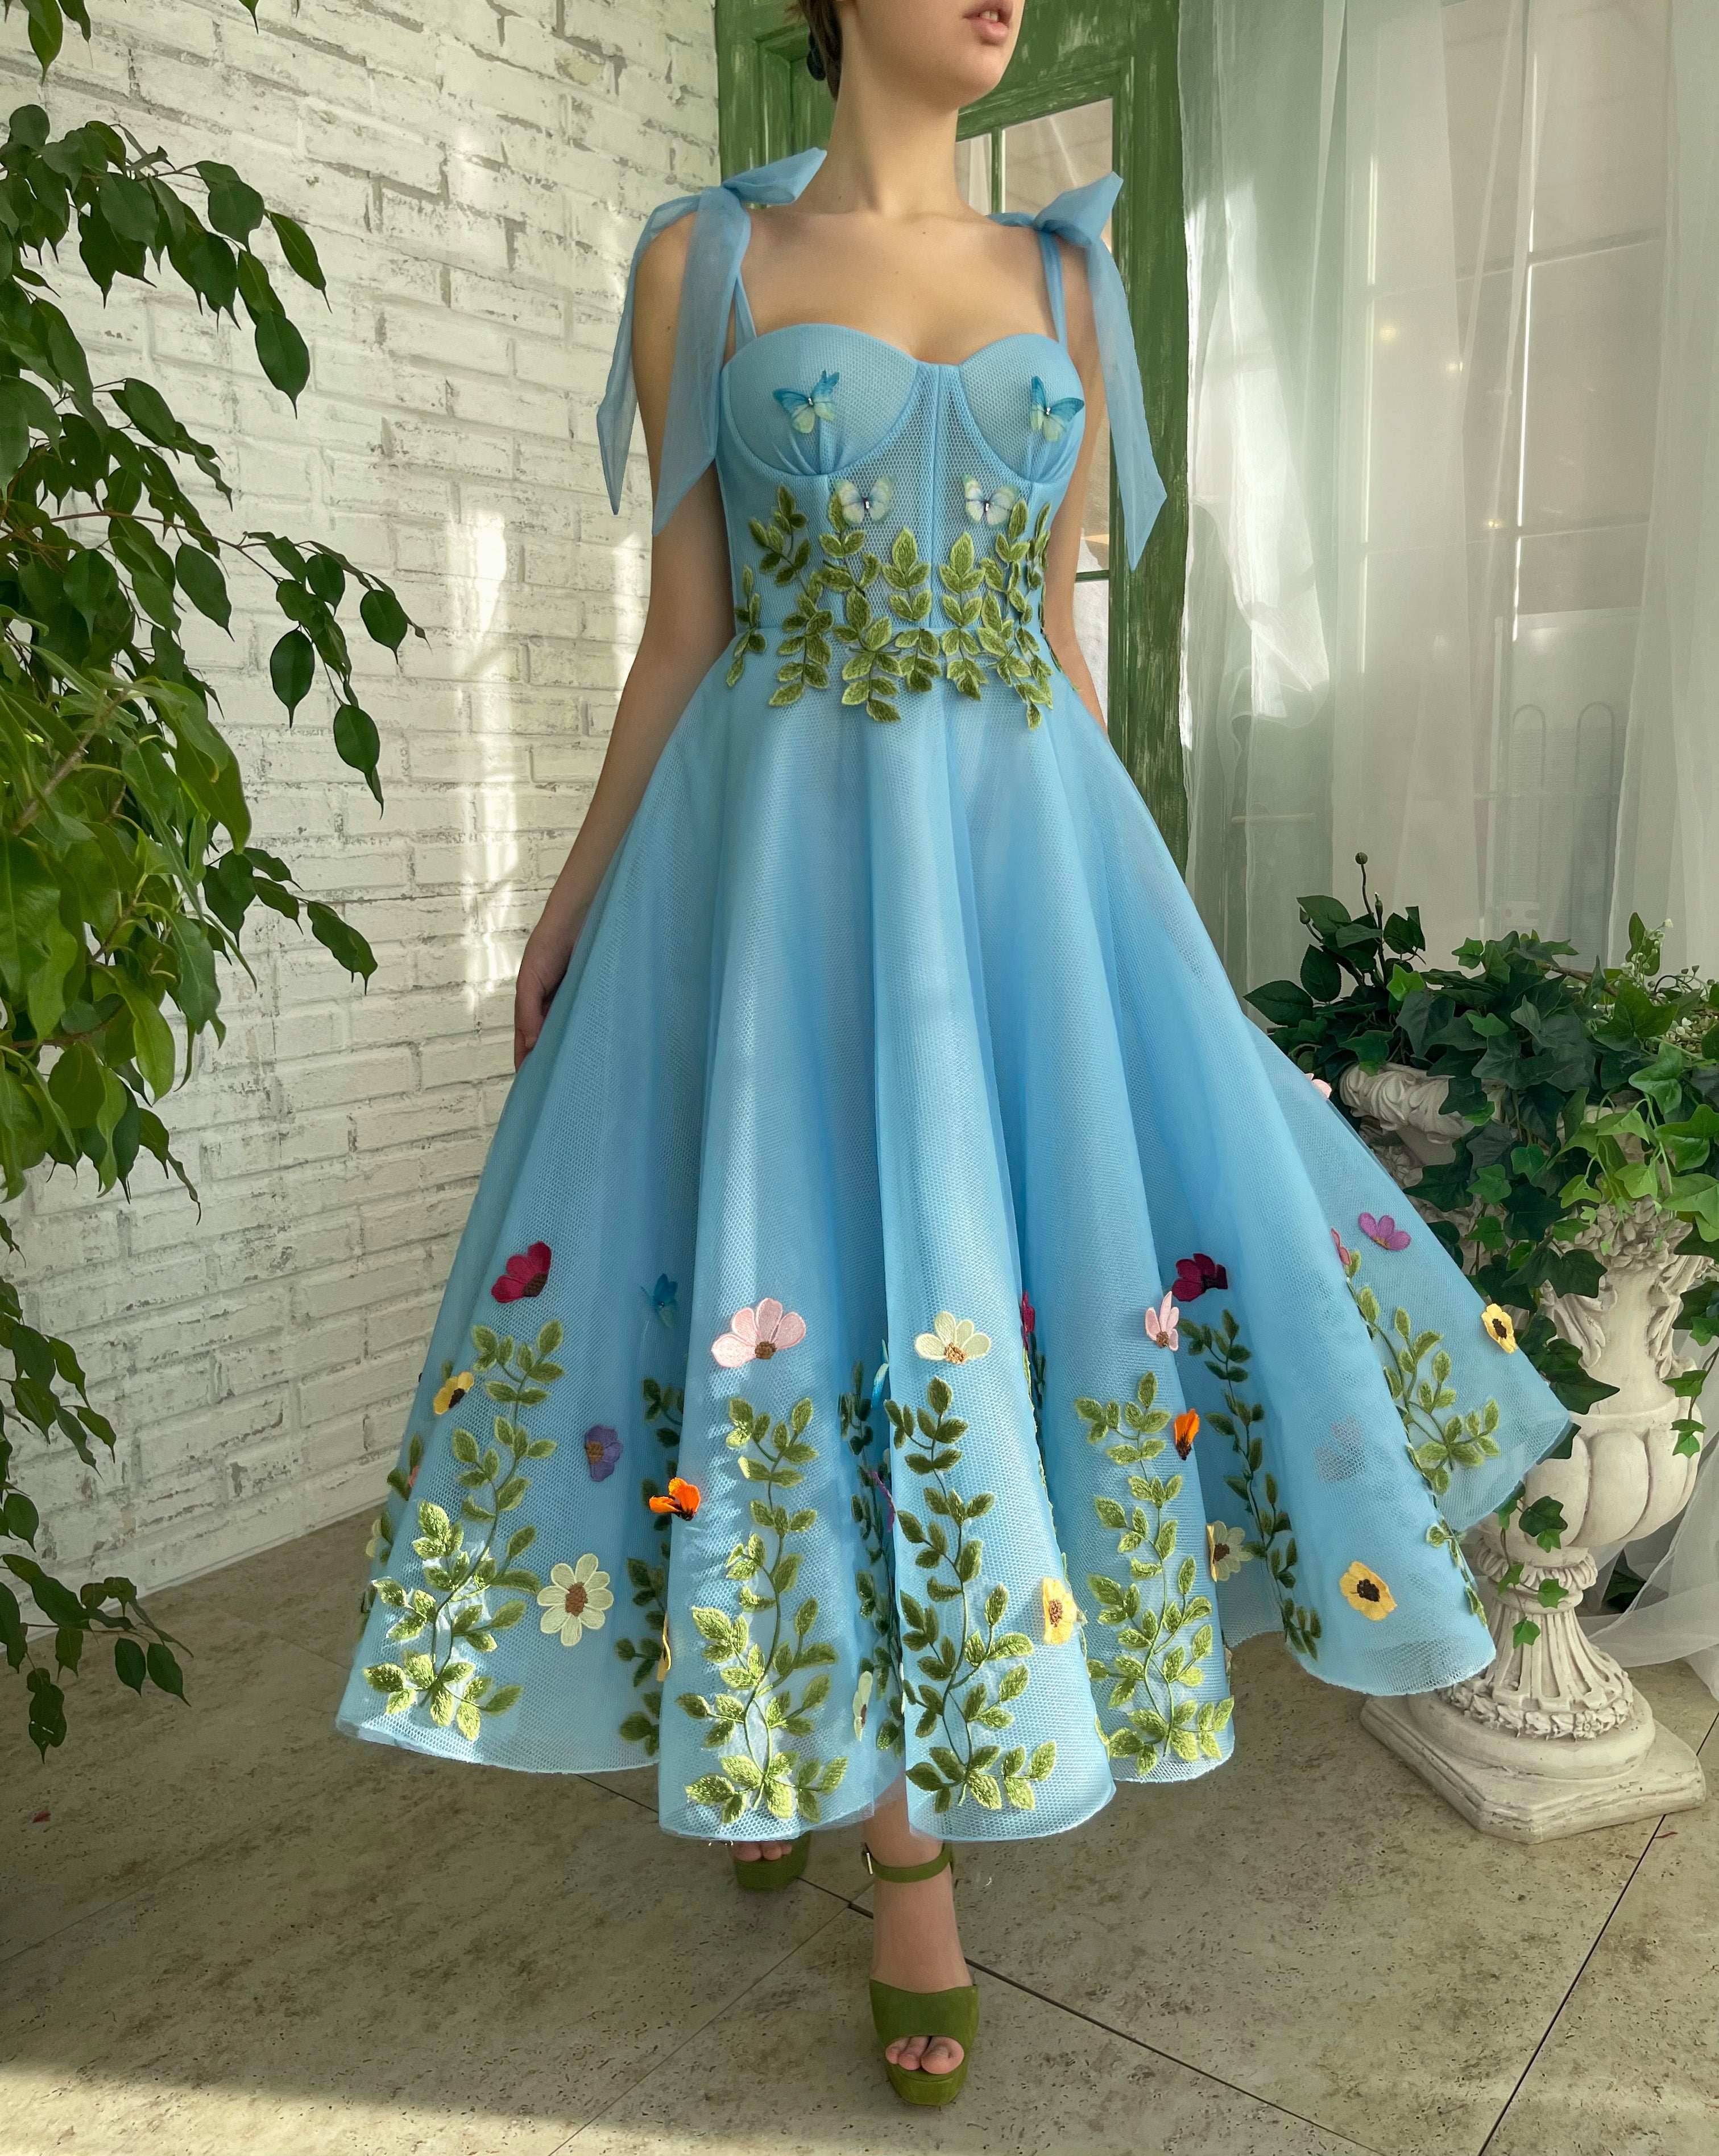 blue floor length dress